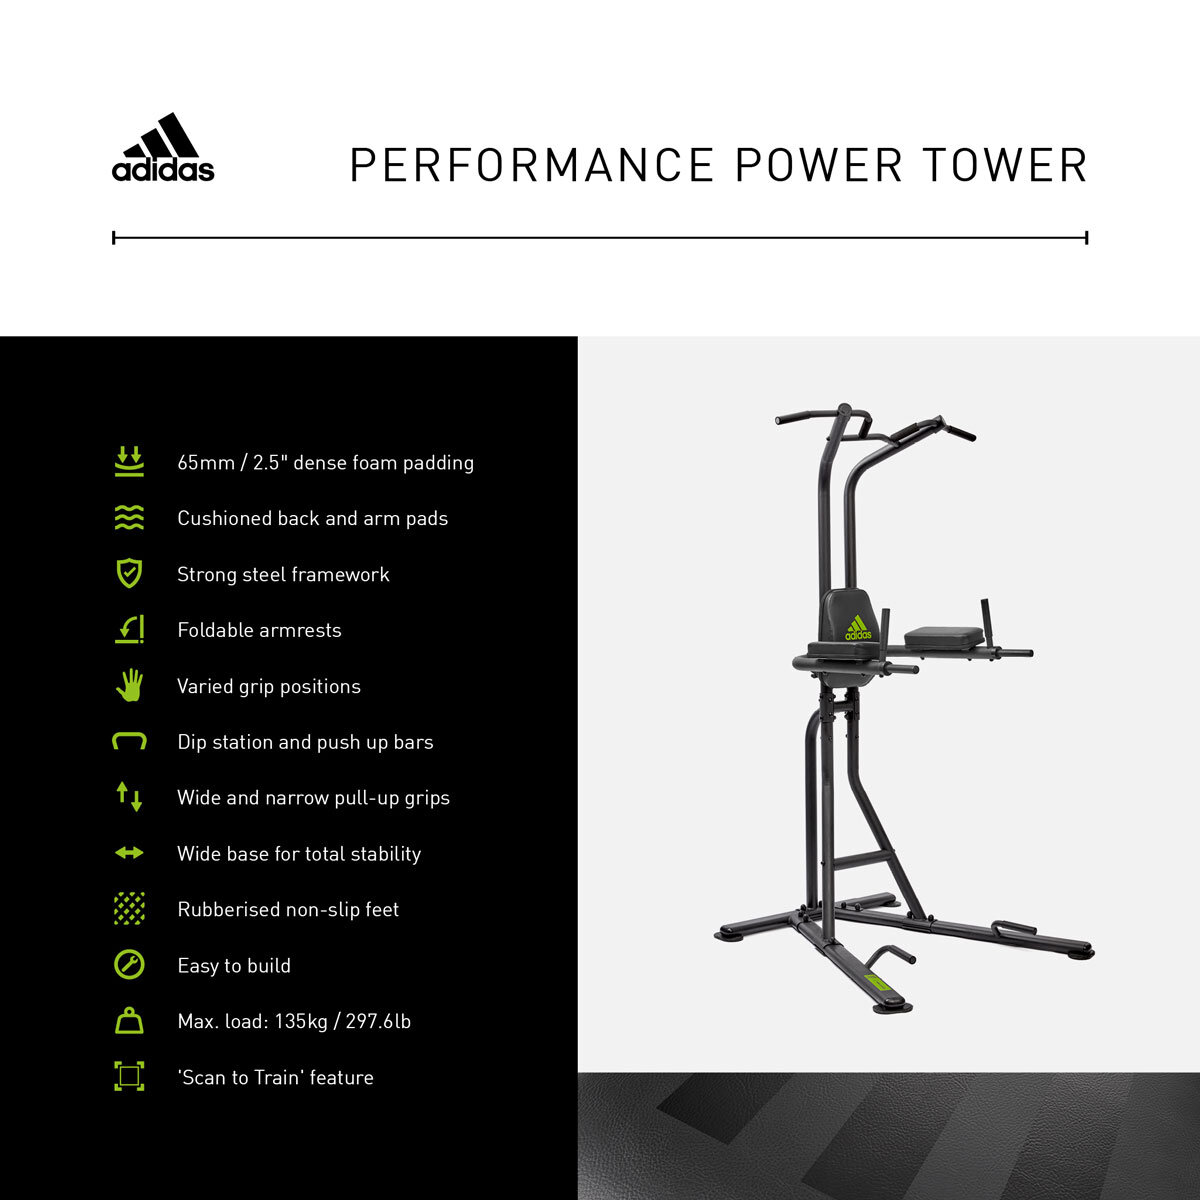 atleet Tekstschrijver Leidinggevende Adidas Performance Power Tower | Costco UK